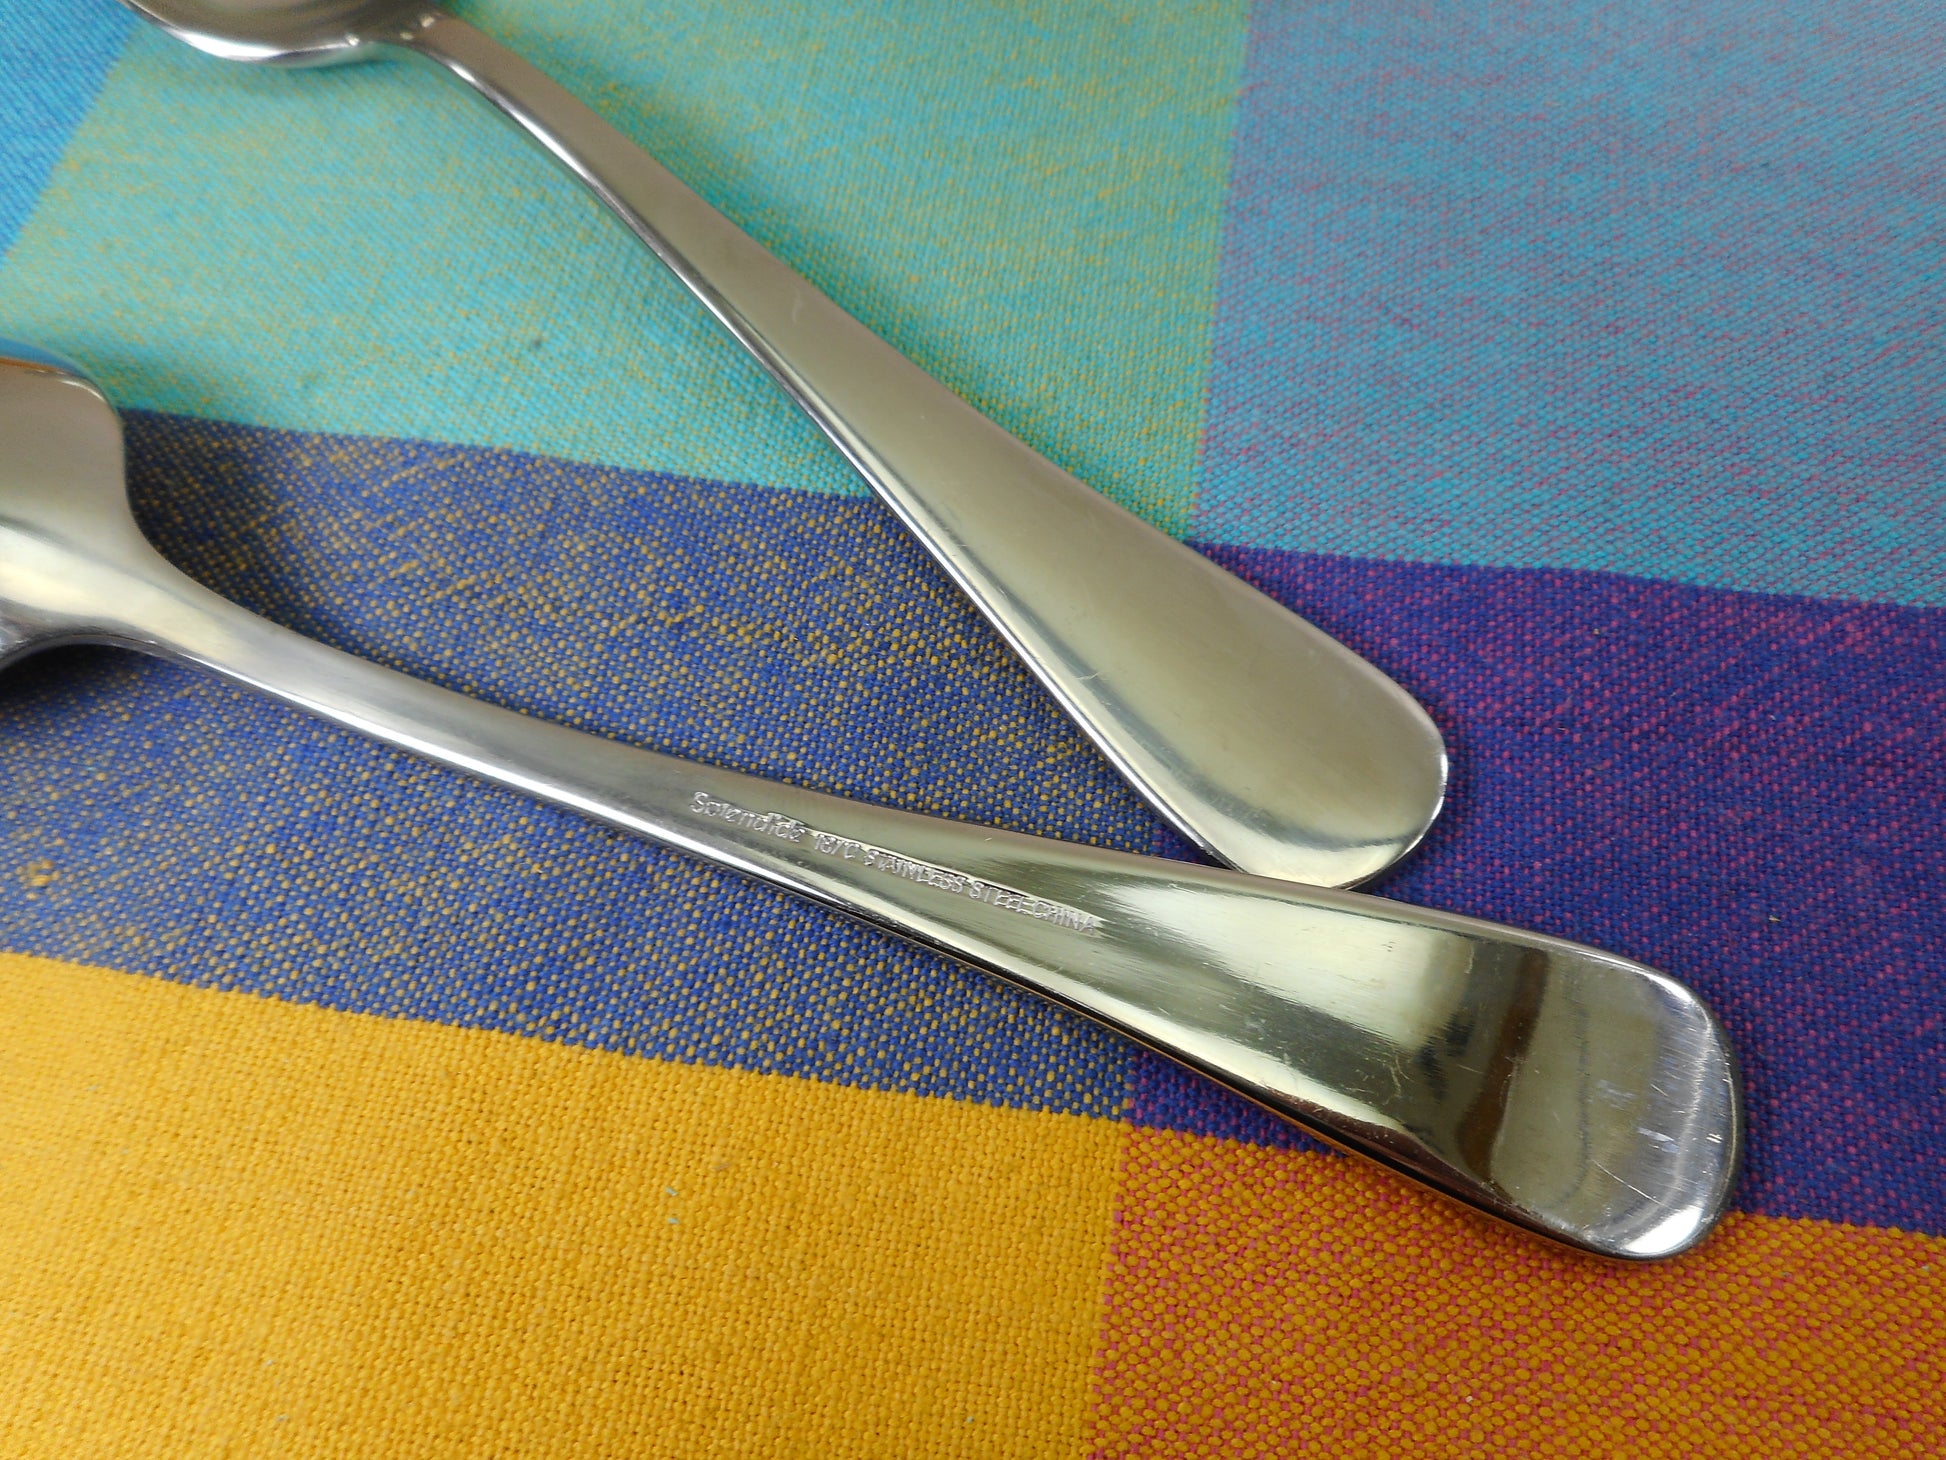 Splendide Cirrus Stainless Steel Flatware - 2 Place Spoons used